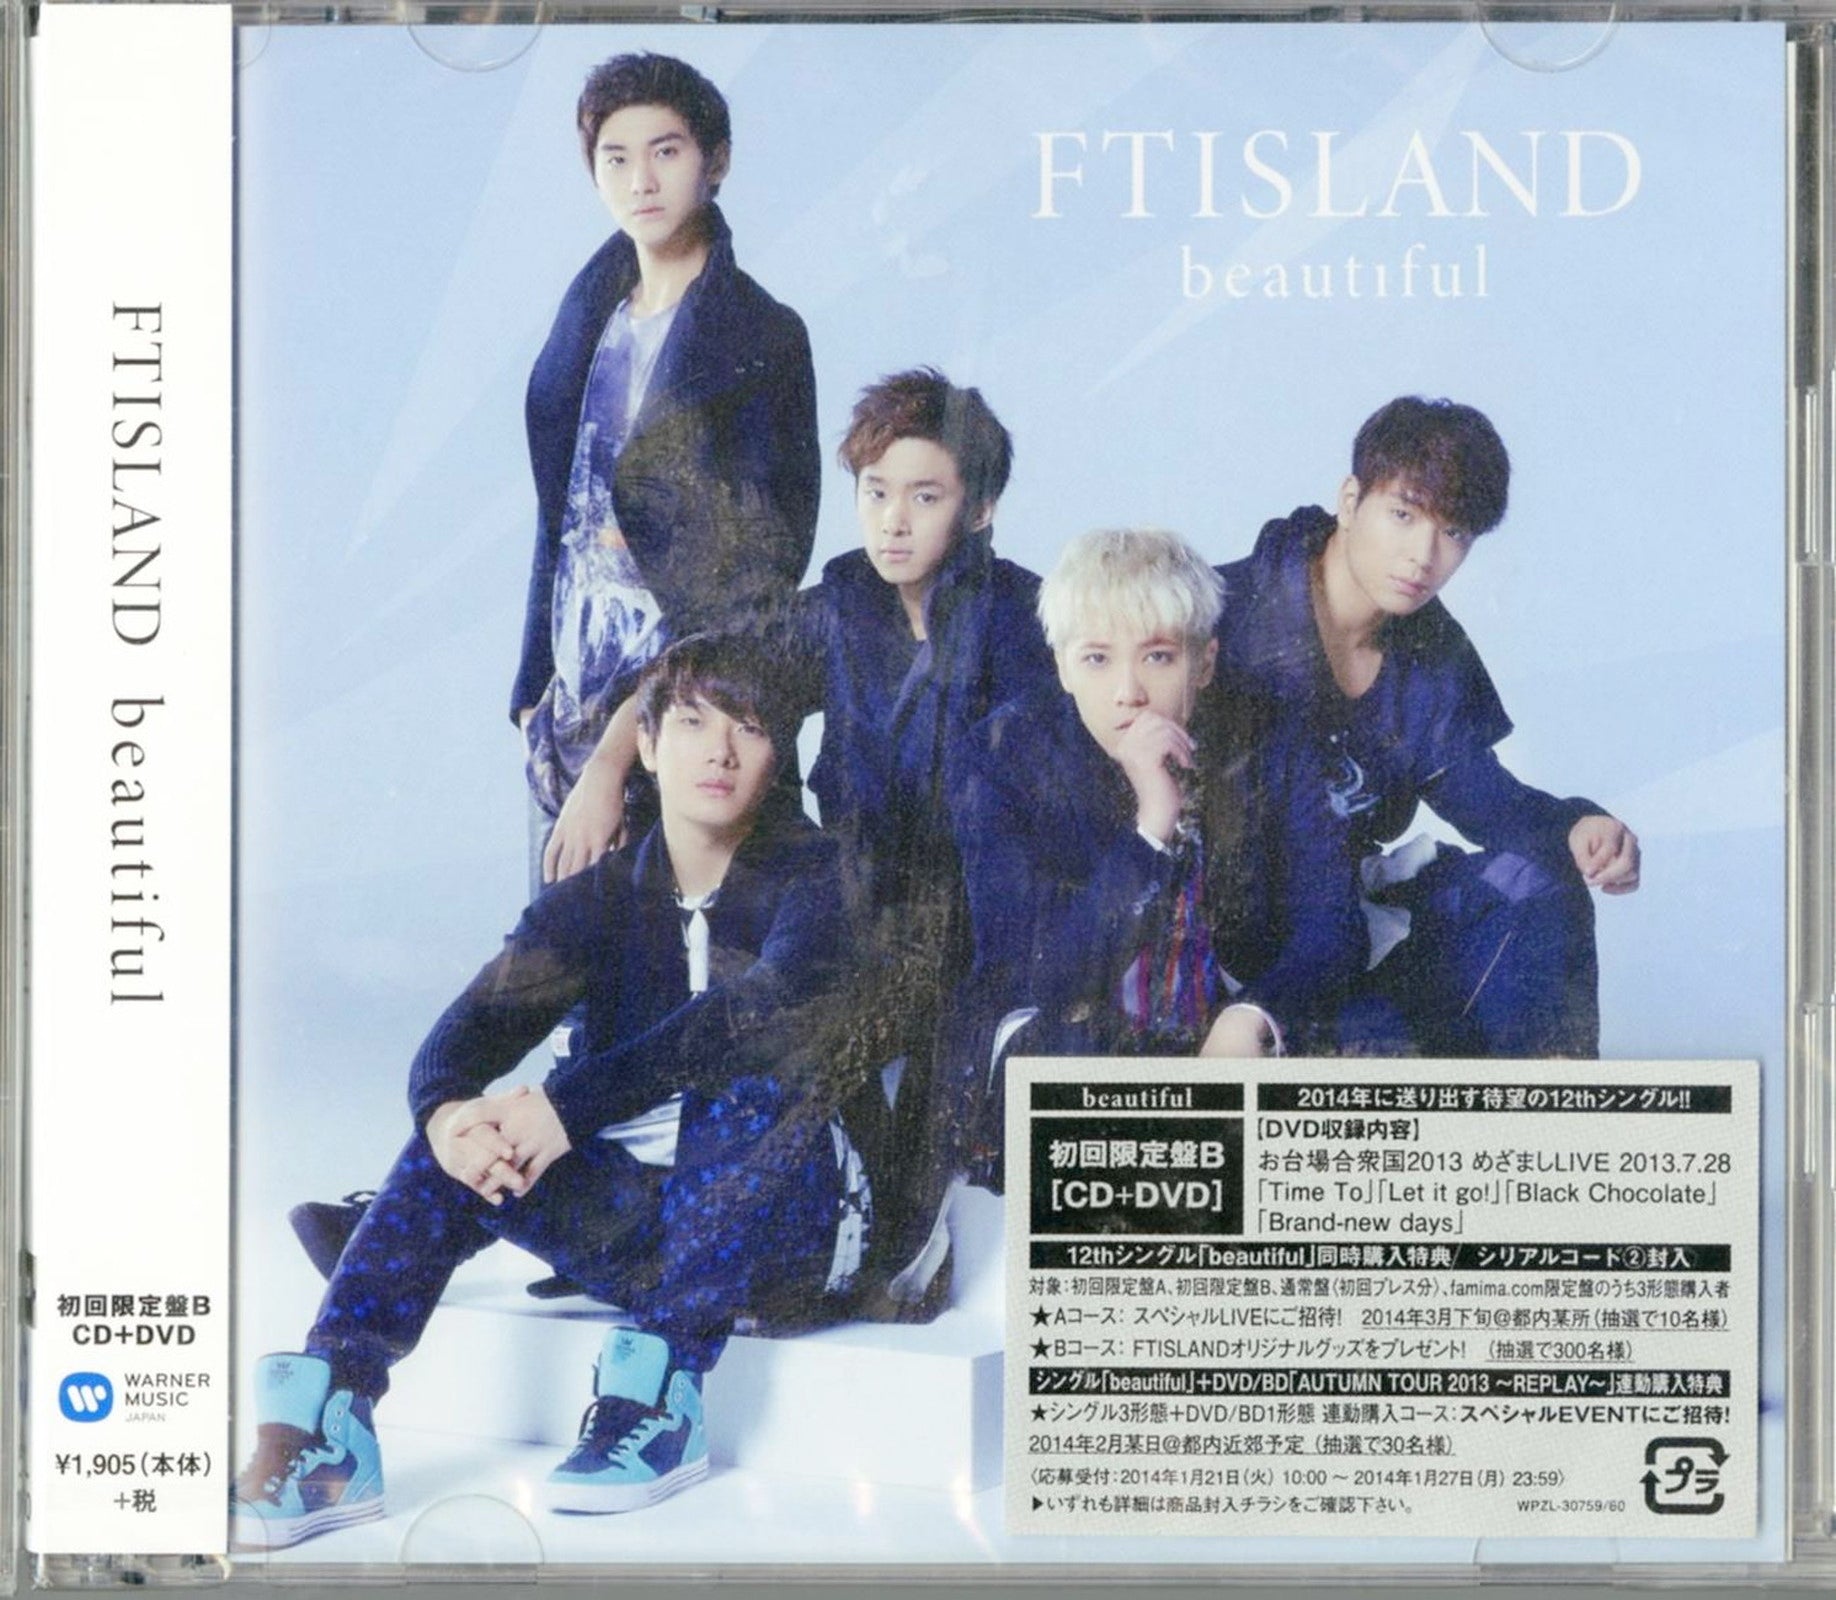 Ftisland - Beautiful (Type-B) - Japan CD+DVD Limited Edition – CDs